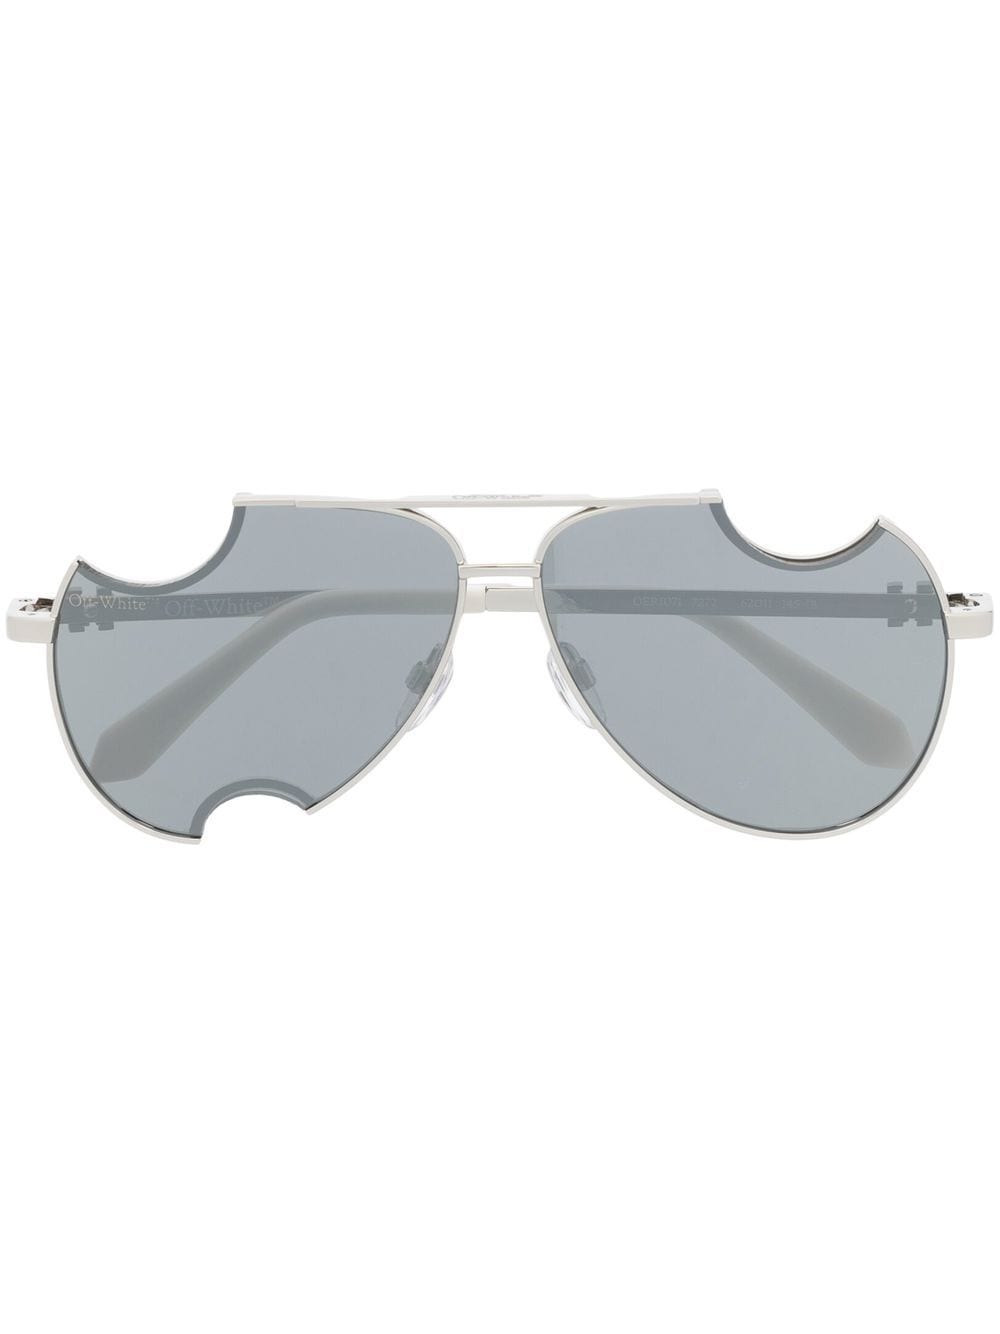 Off-White Off-White VIRGIL Sunglasses - Stylemyle